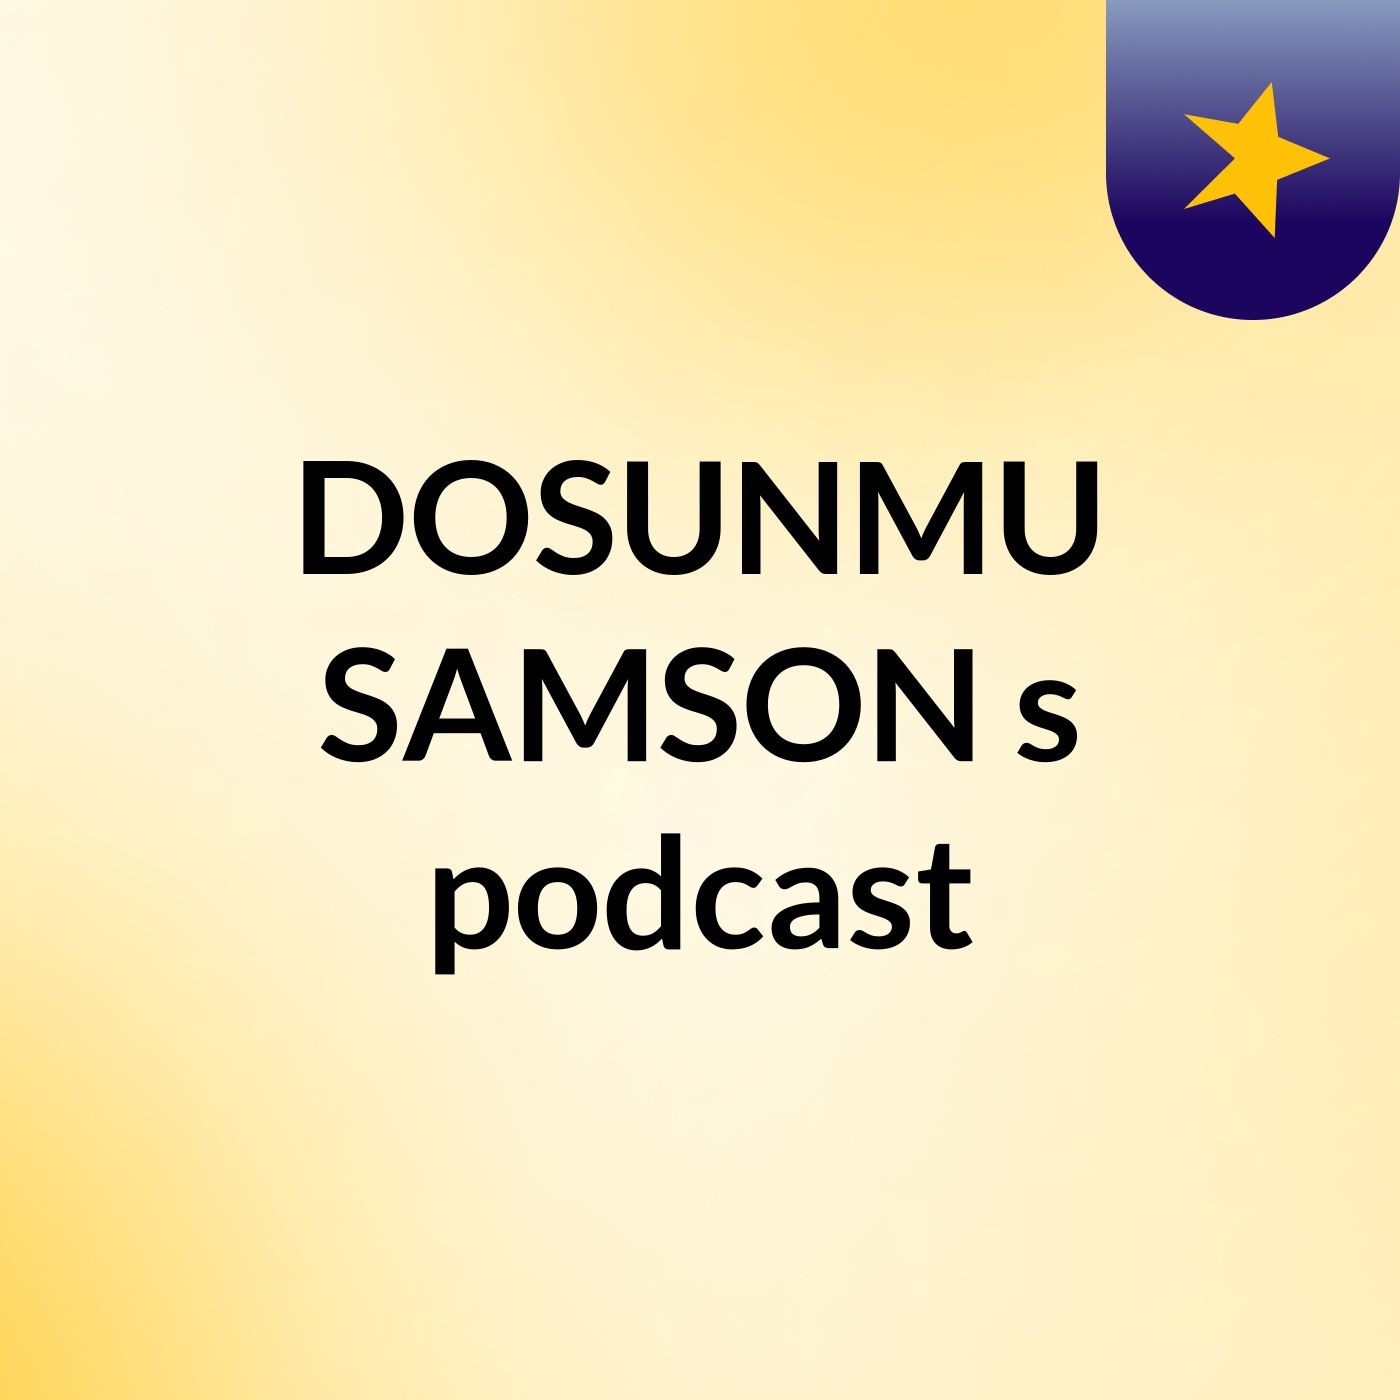 Episode 6 - DOSUNMU SAMSON's podcast